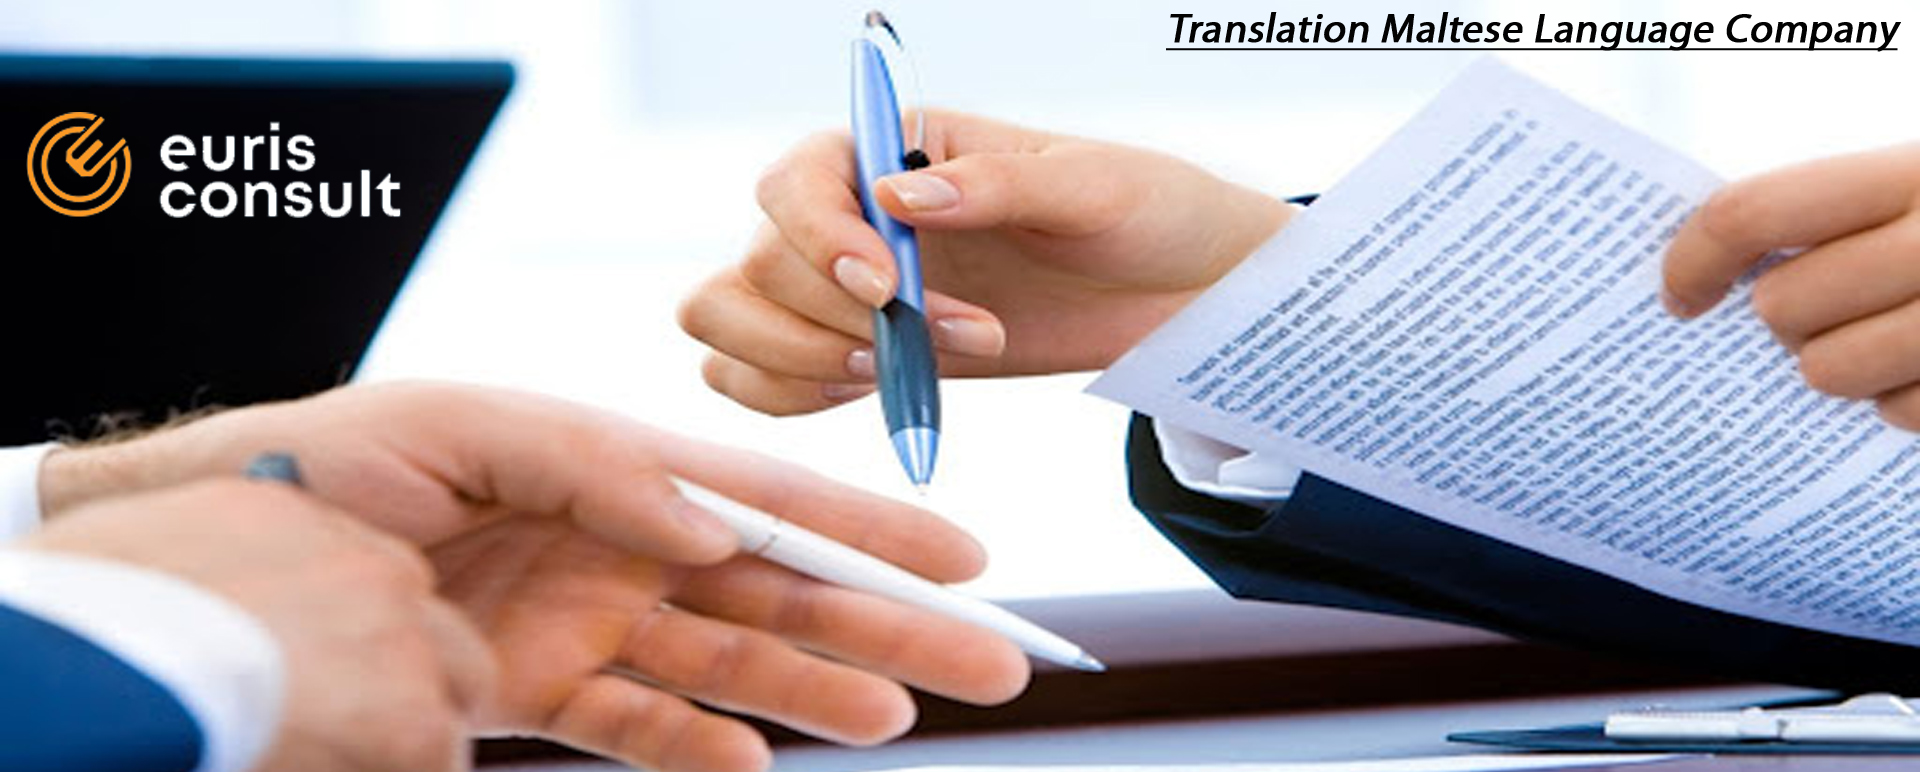 Translation Maltese Language Company